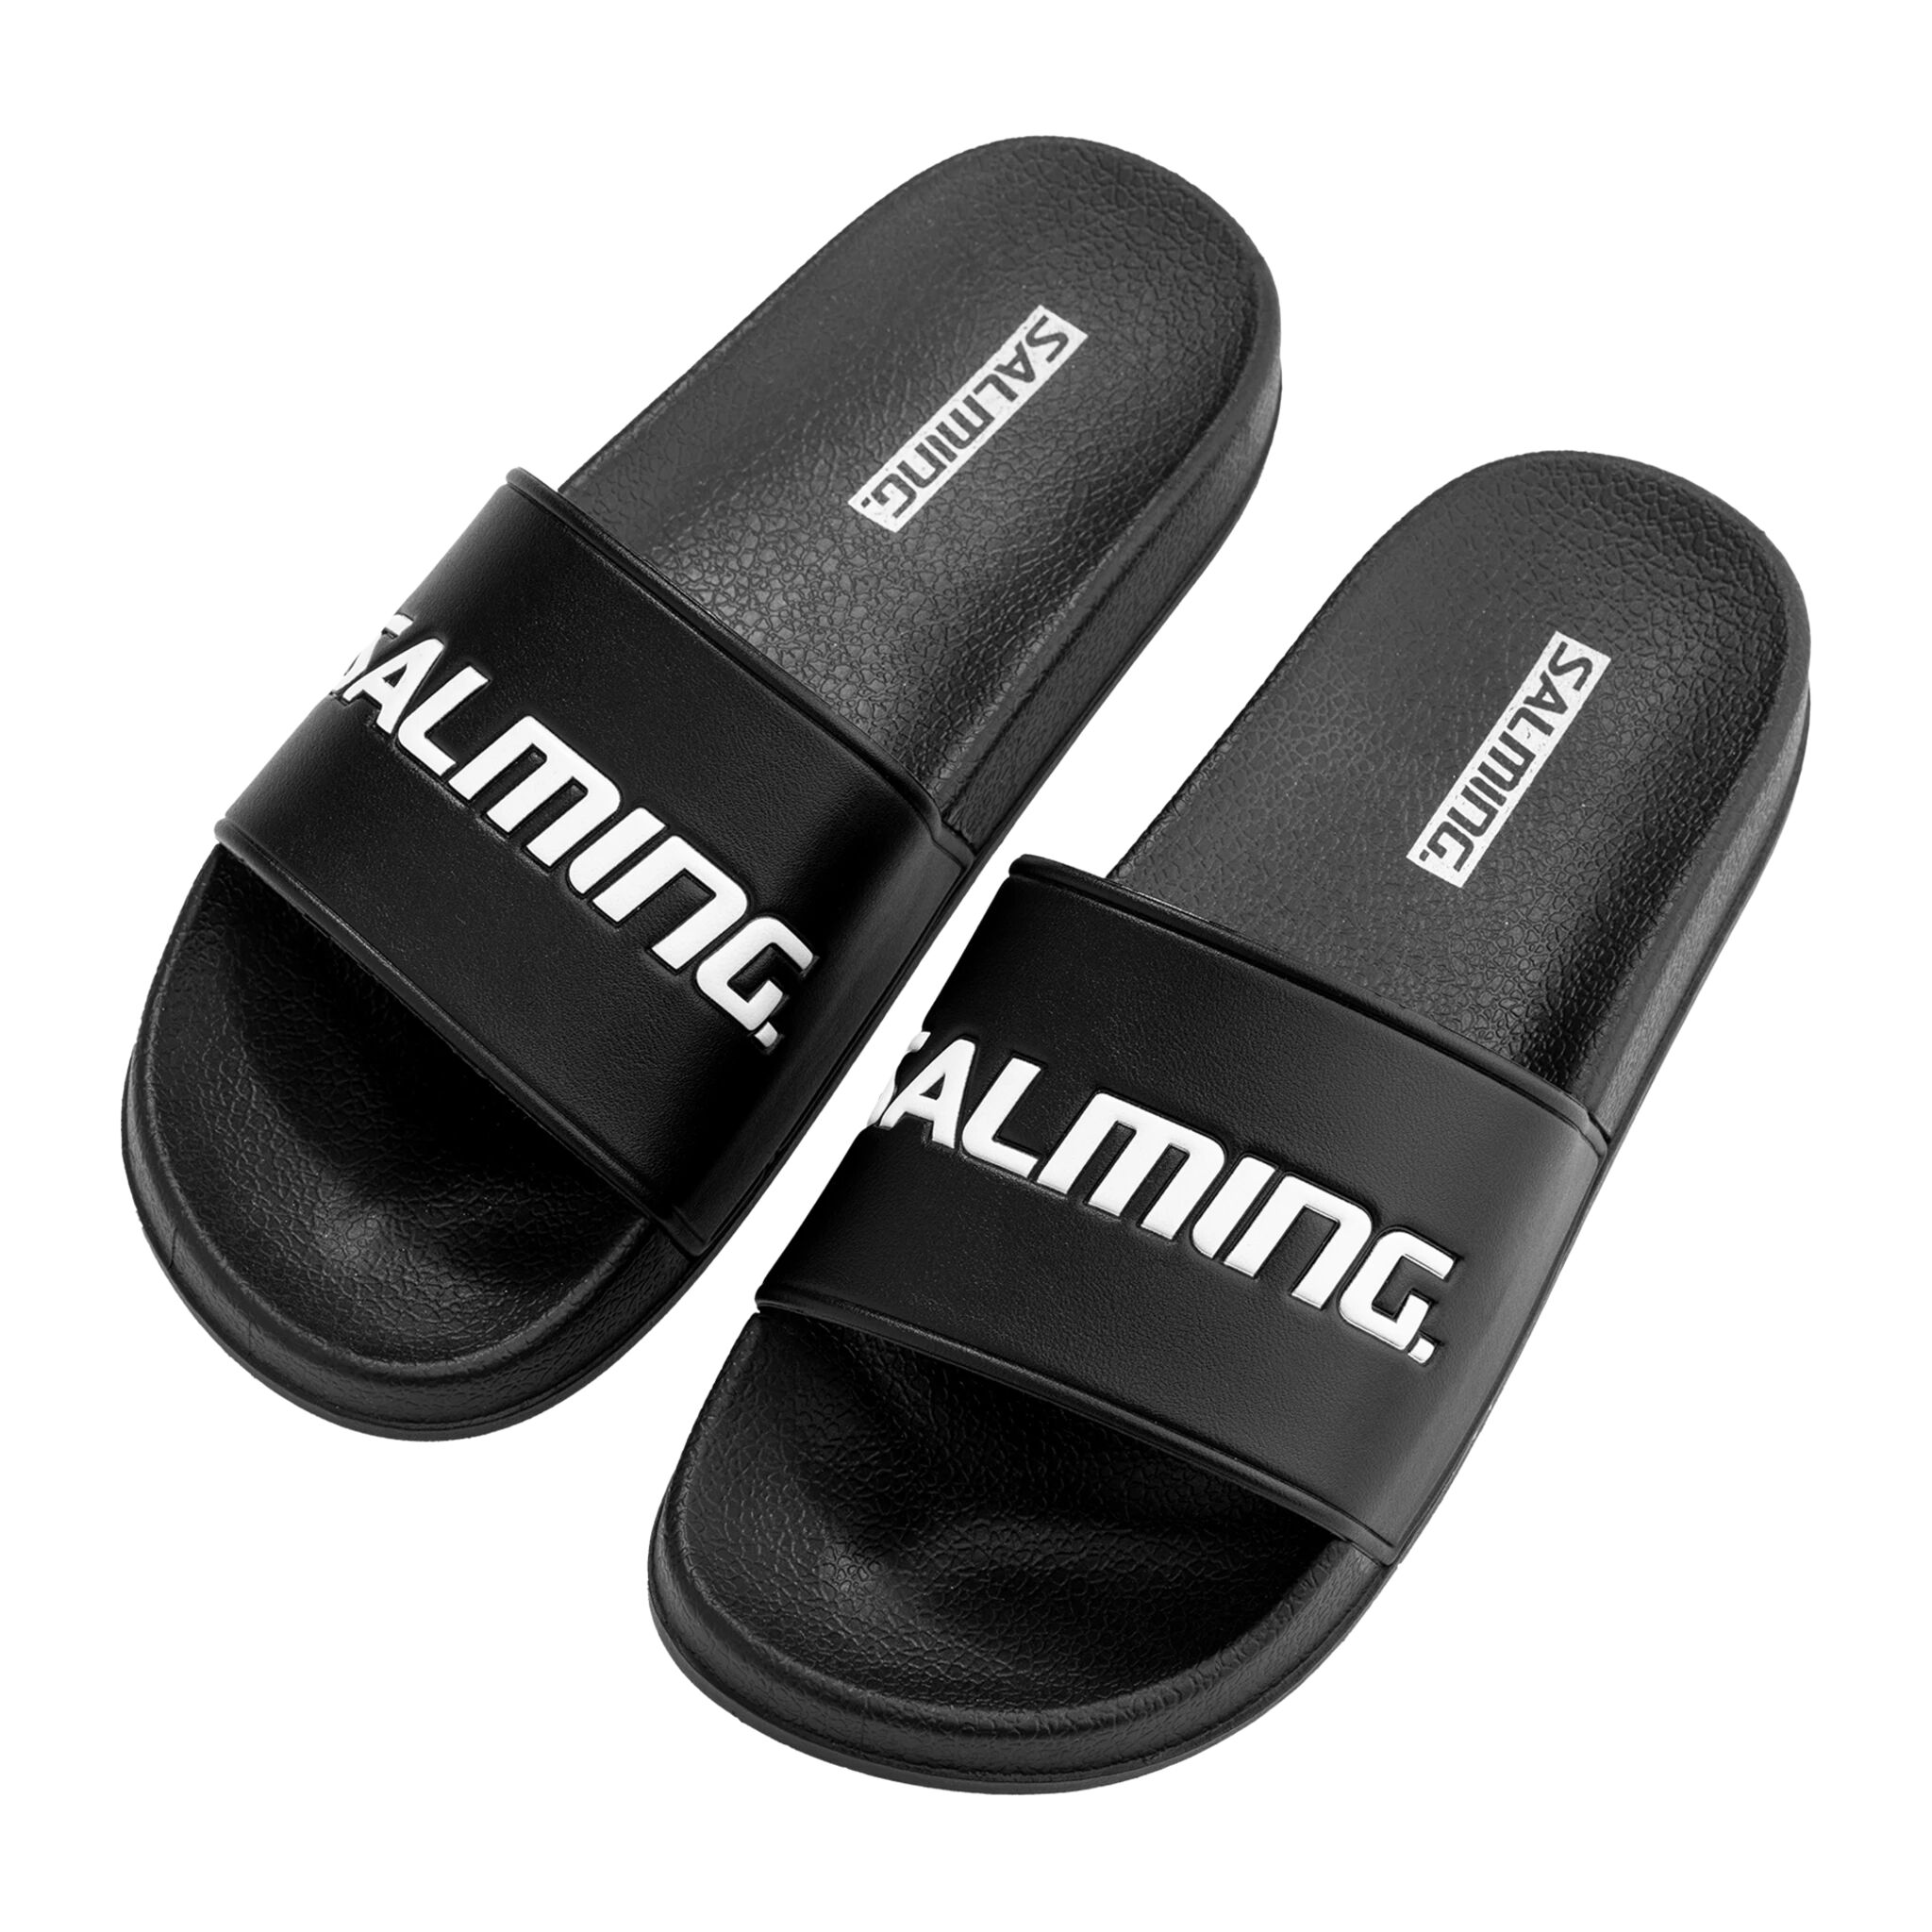 Salming Comfort Shower Sandal JR/SR-21/22, slippers 46/47 BLACK